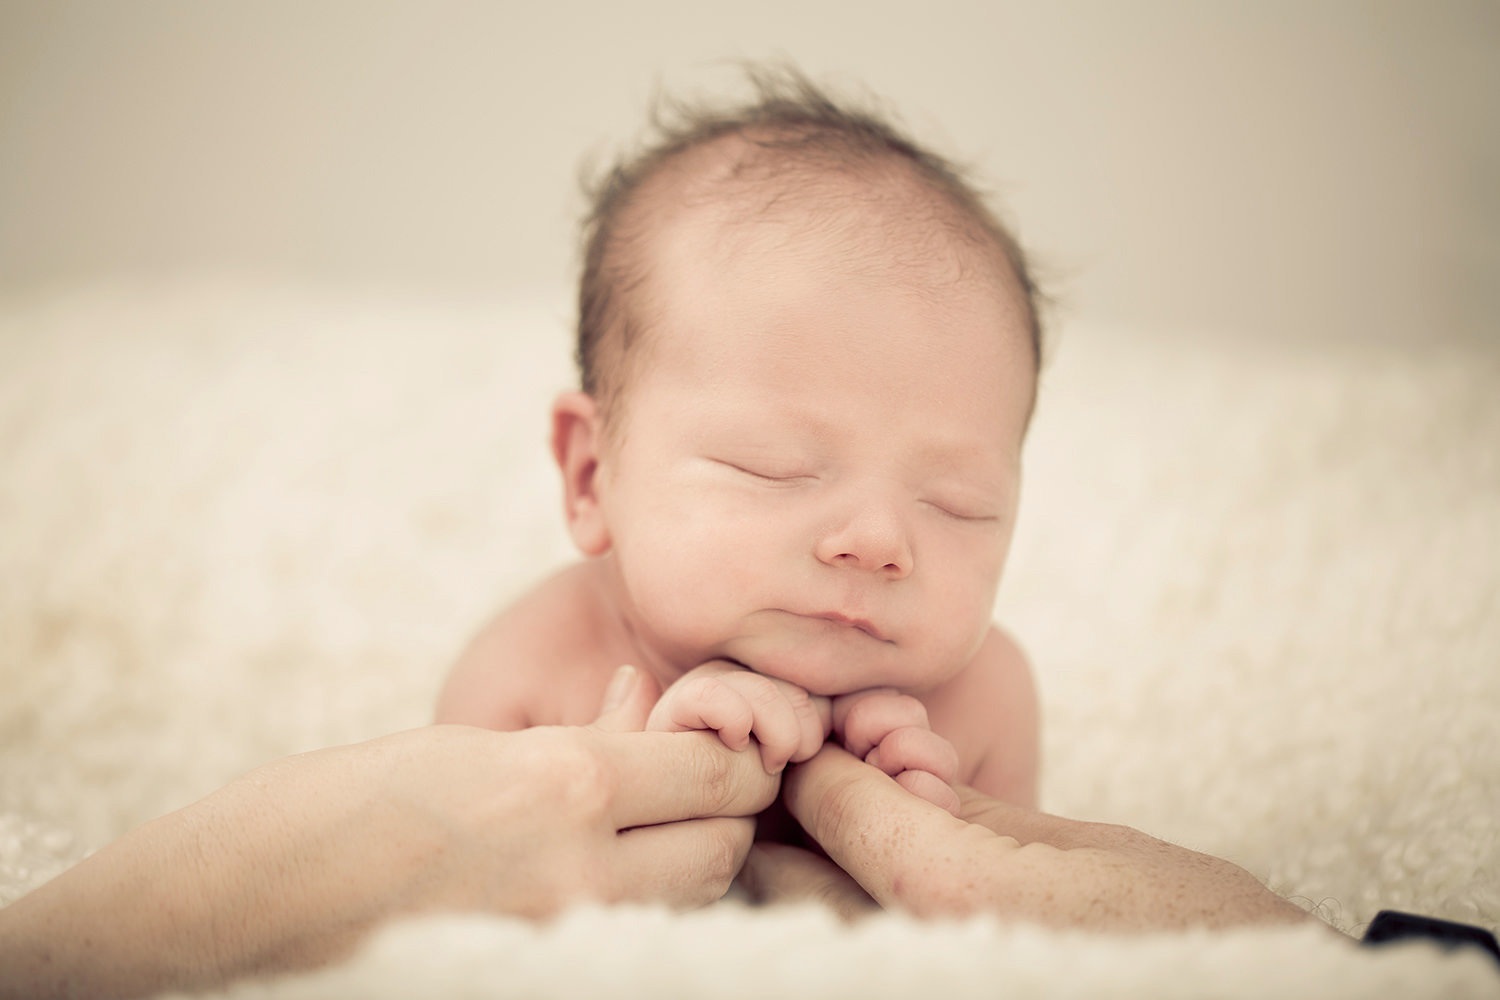 san diego newborn photographer | newborn with parents hand holding him up